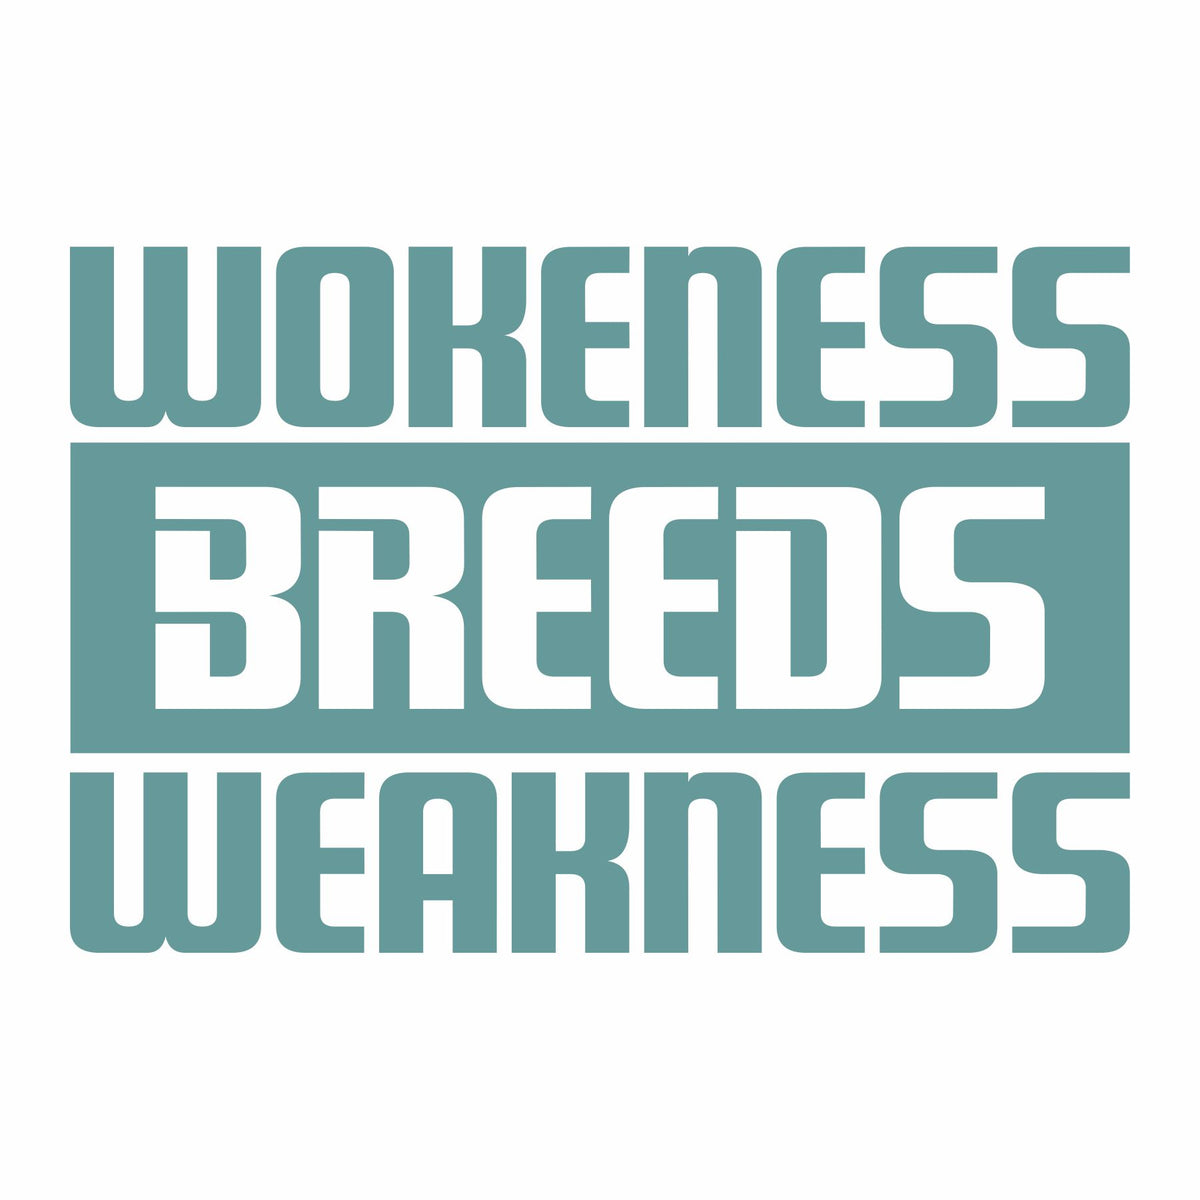 Wokeness Breeds Weekness - Vinyl Decal - Free Shipping